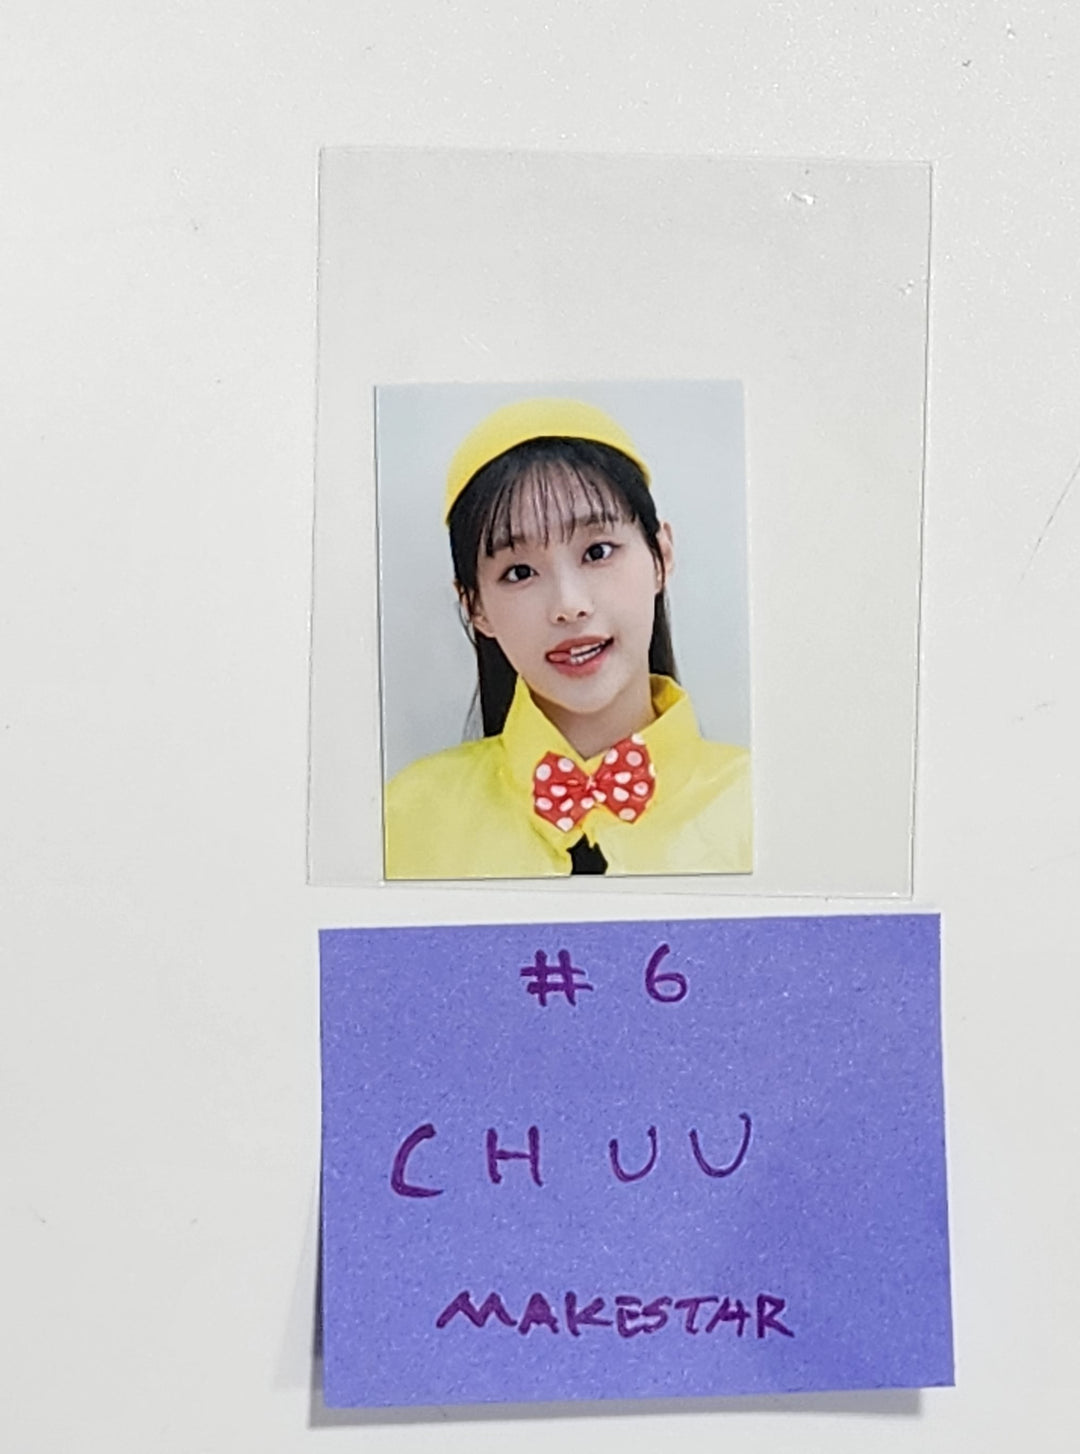 CHUU "Howl" - Makestar Fansign Event ID Photo, Photocards Round 6 [24.1.10]